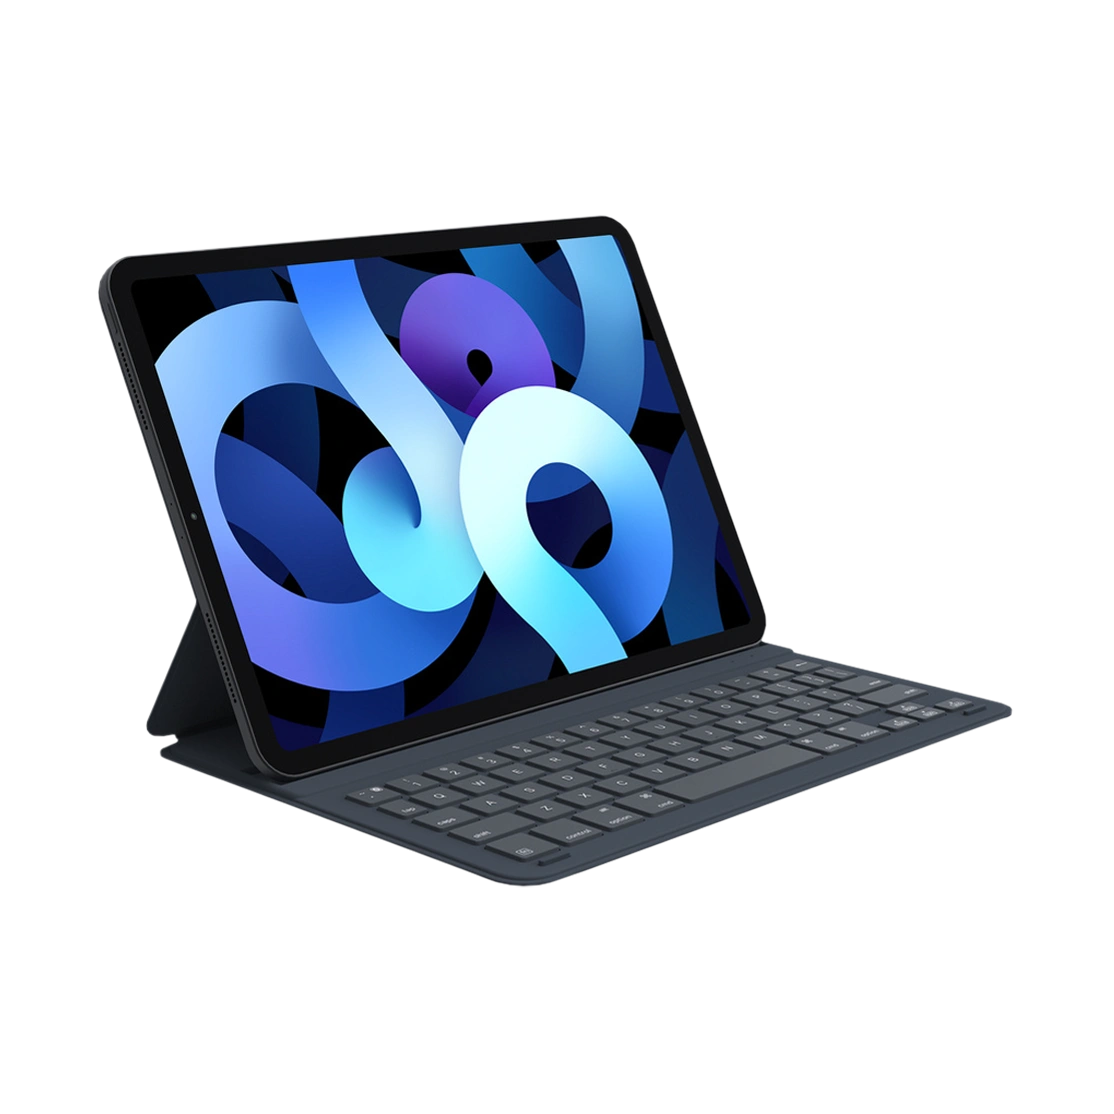 Jcpal FolioKeys Slim Keyboard Folio For iPad Air 10.9 inch And iPad Pro 11 inch